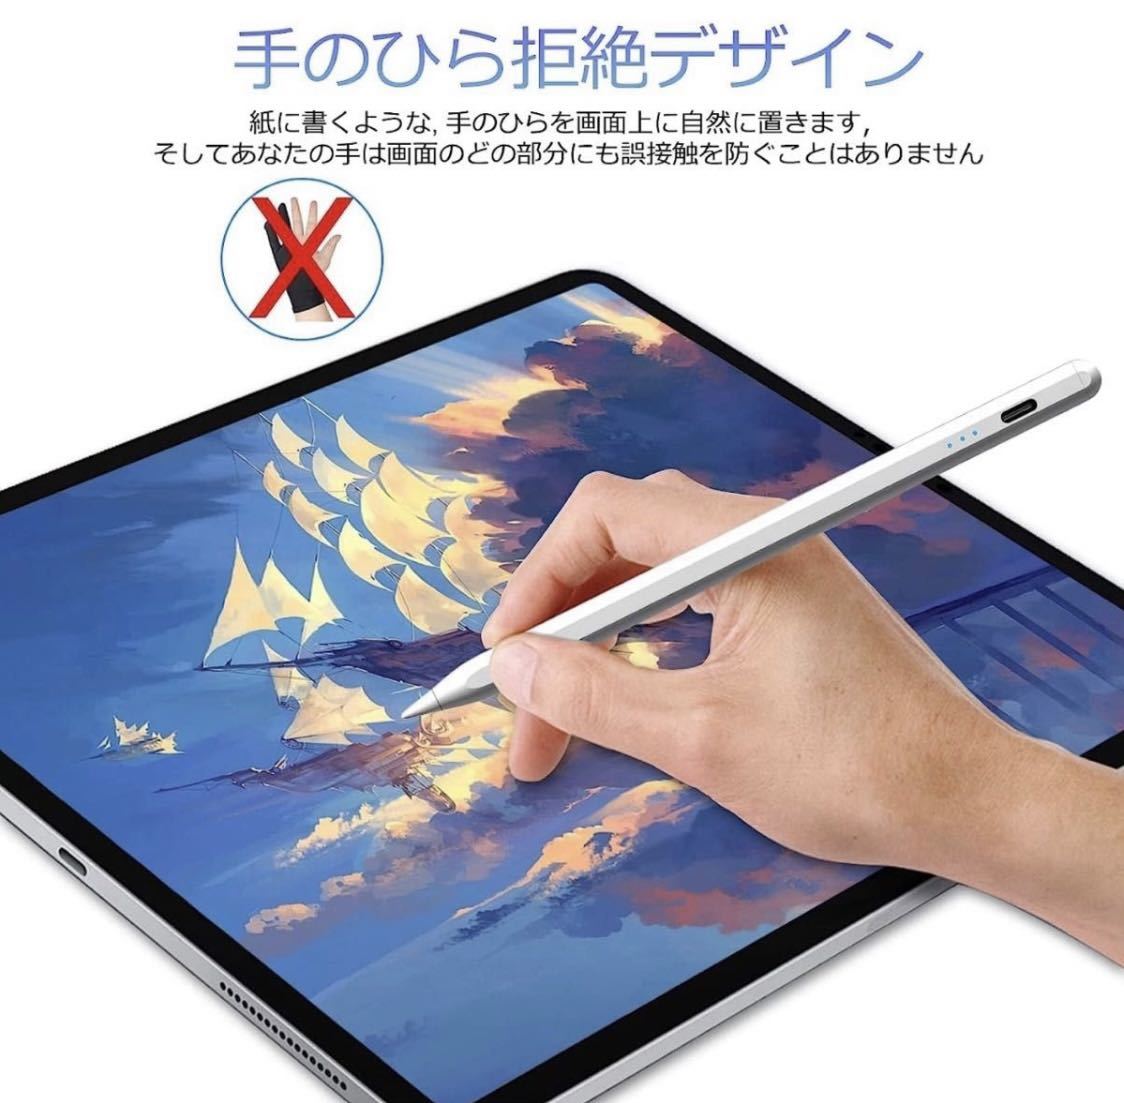 iPad タッチペン 急速充電 スタイラスペン 高感度 pencil 傾き感知/磁気吸着/誤作動防止機能対応 軽量 耐摩 2018年以降iPad対応です_画像4